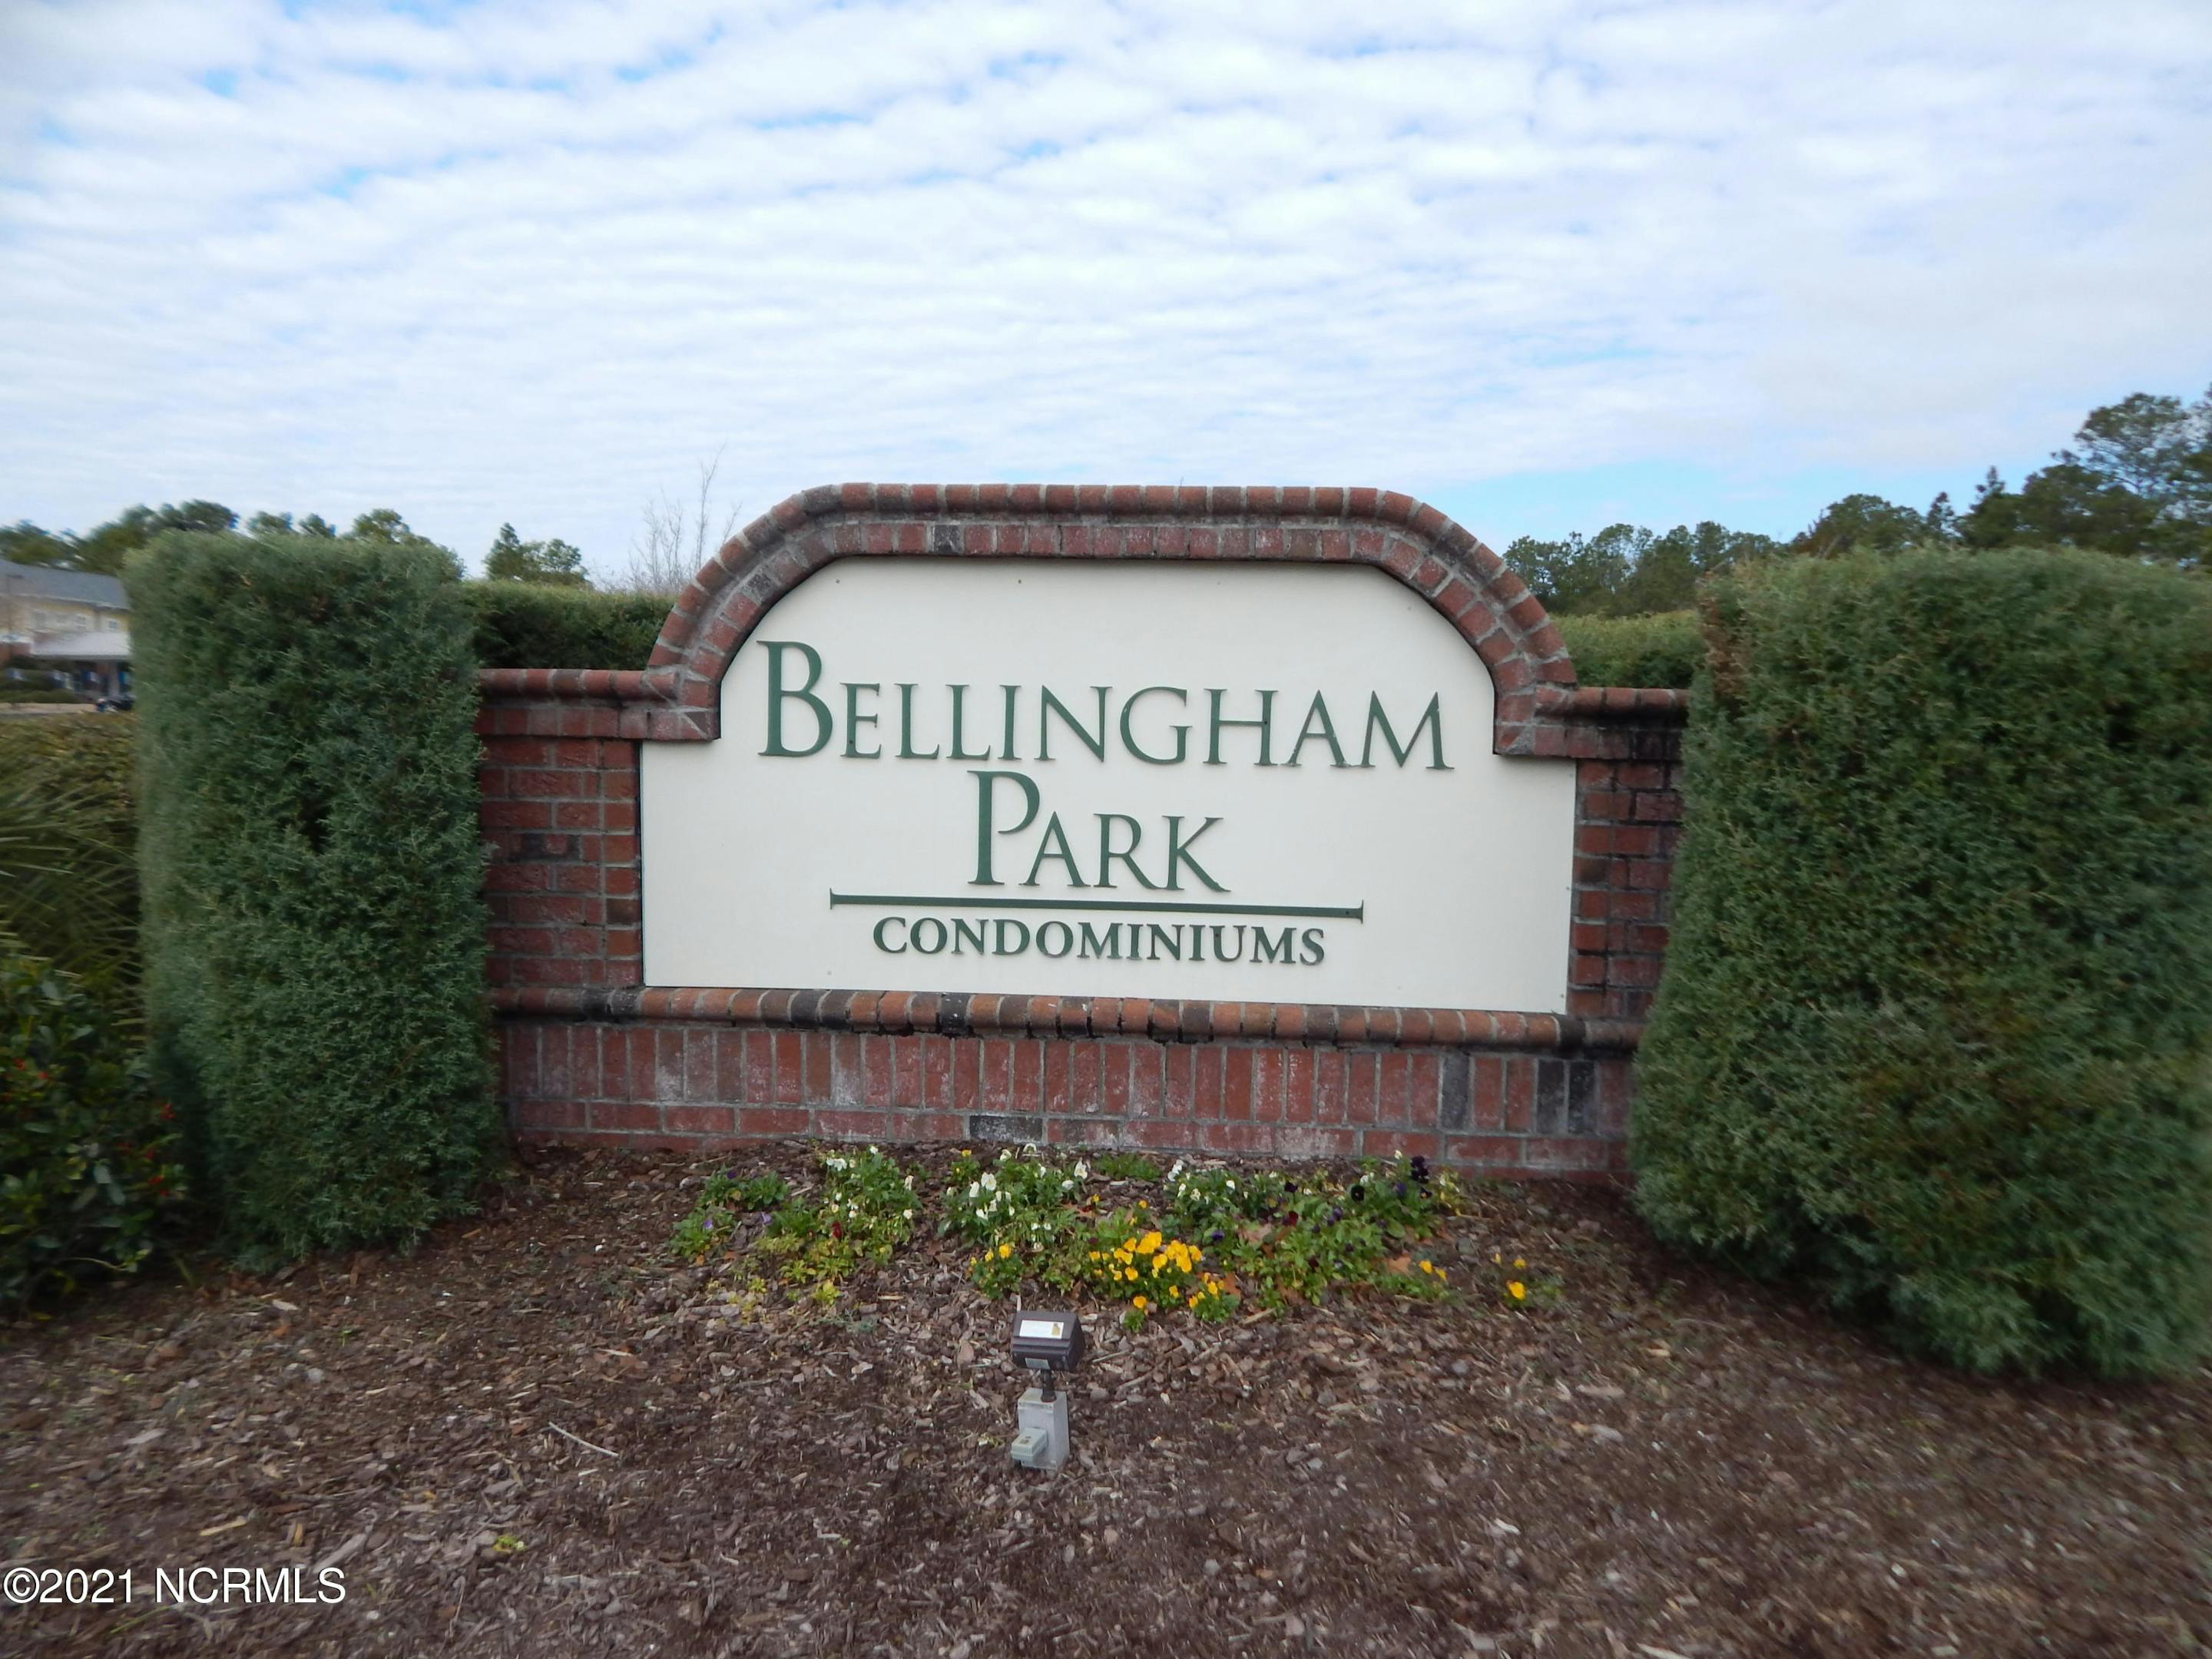 Entrance to Bellingham Park